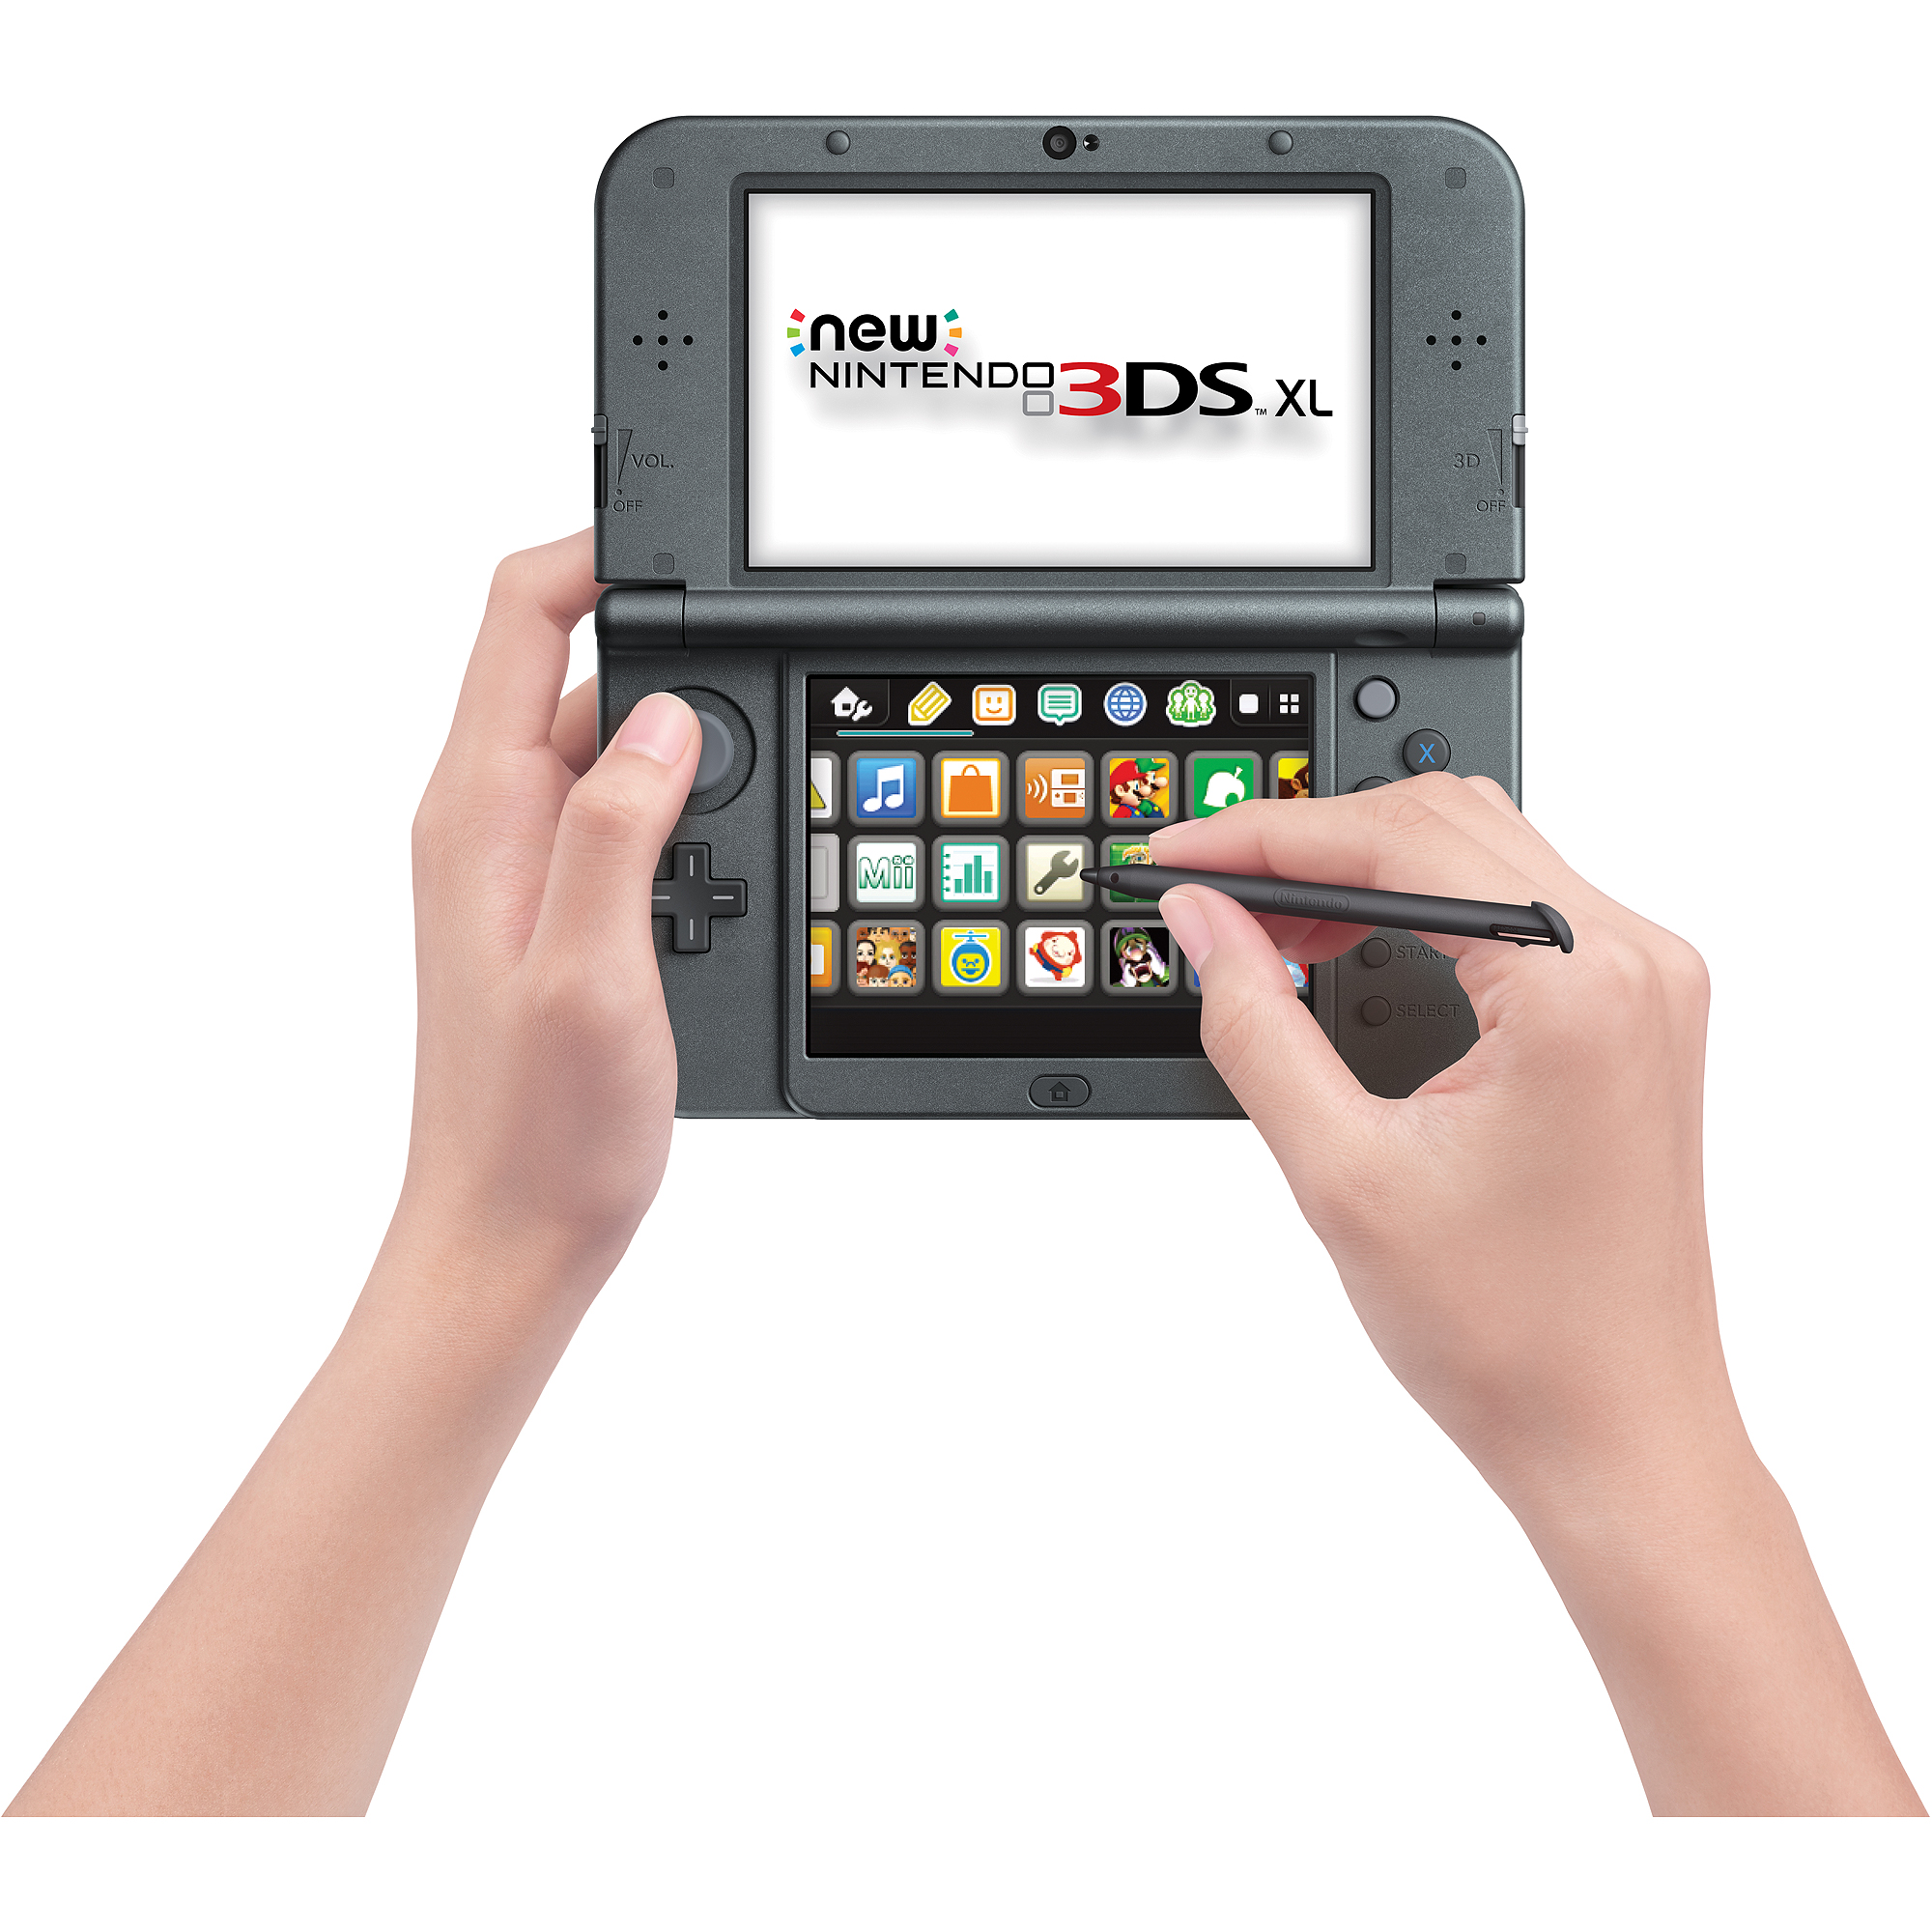 Nintendo New 3DS XL - Black - image 3 of 12